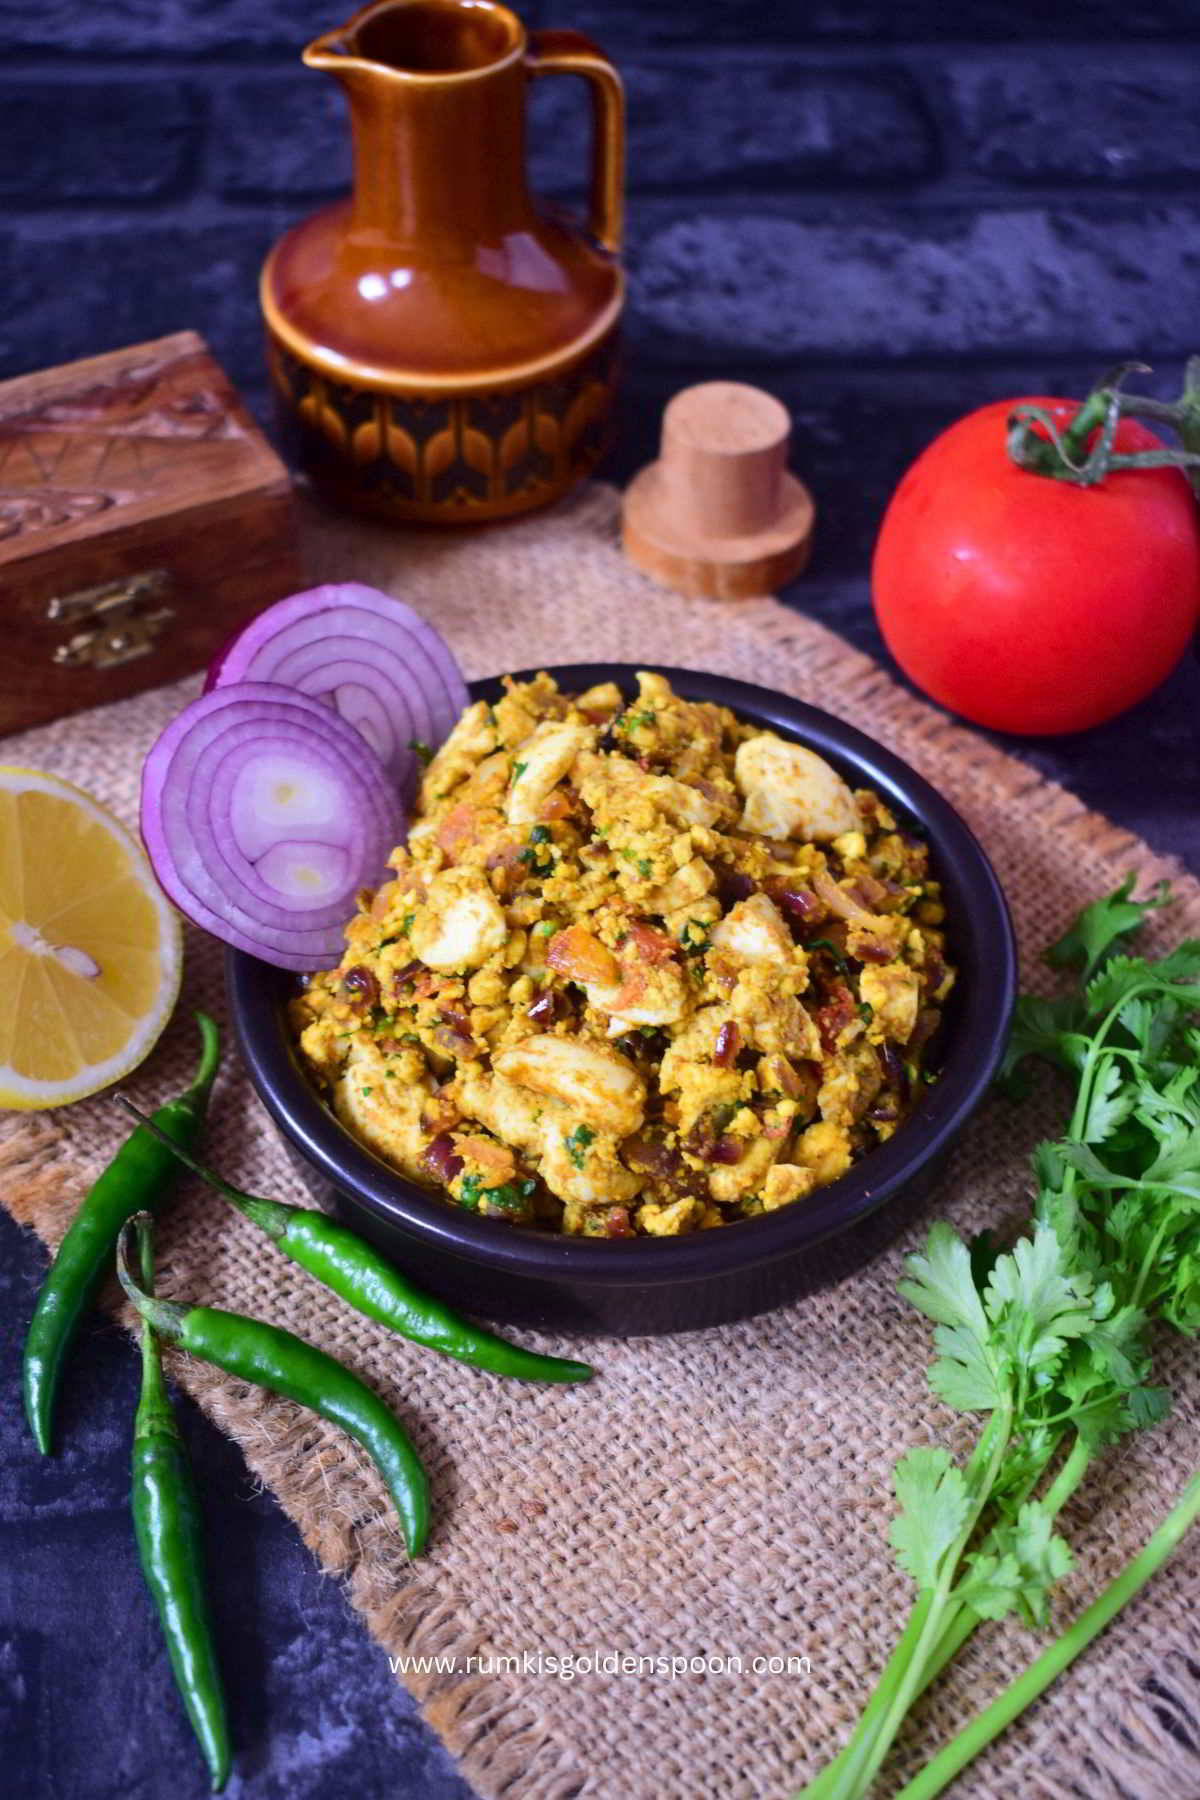 egg bharta, egg bharta recipe, recipe for egg bharta, how to make eg bharta, anda bharta, ande ka bharta, bharta recipe, egg recipe Indian, Indian egg recipes, Rumki's Golden Spoon